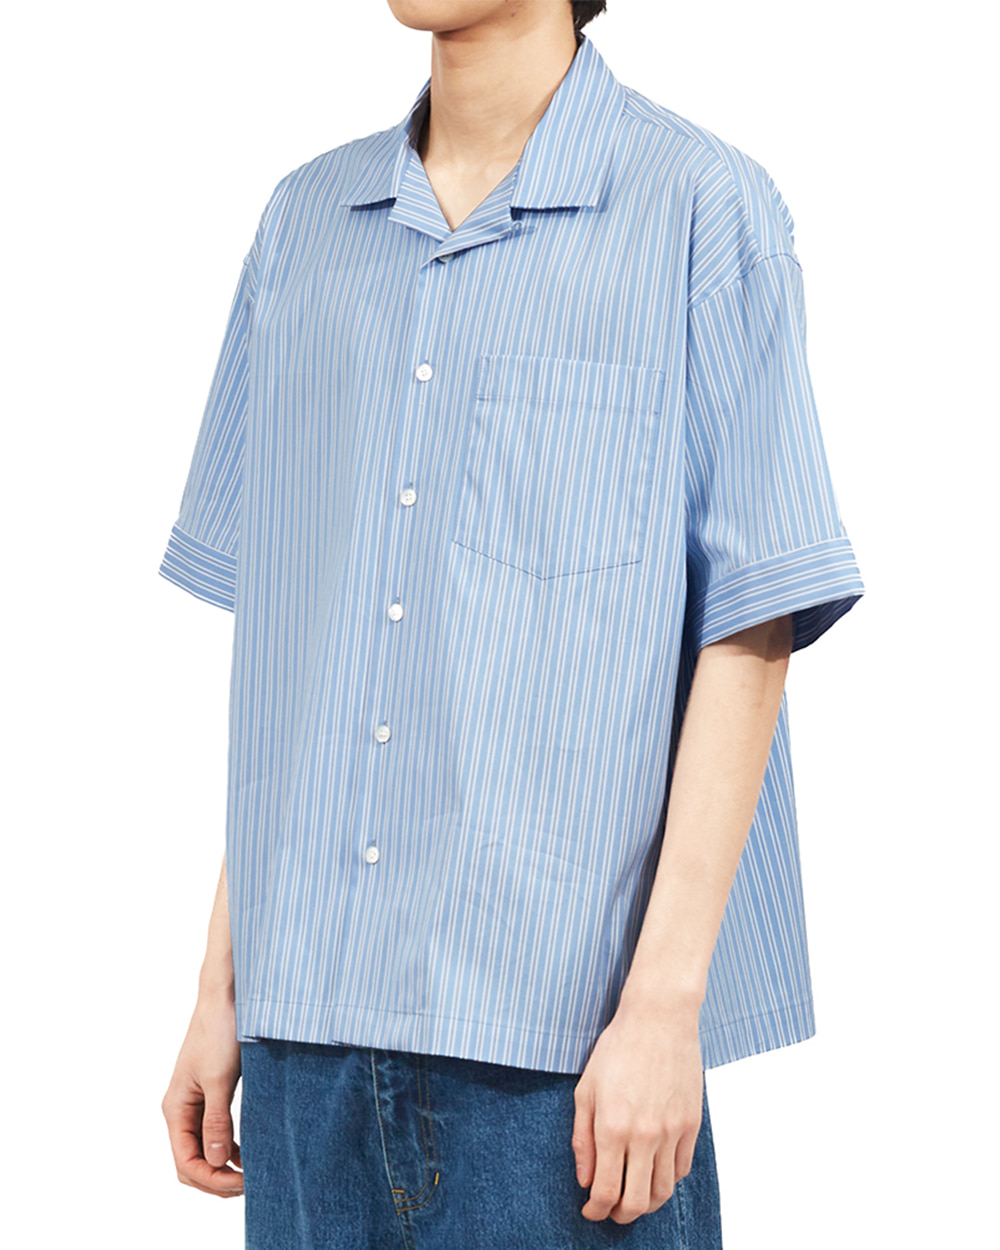 Open Half Shirts (Blue Stripe)